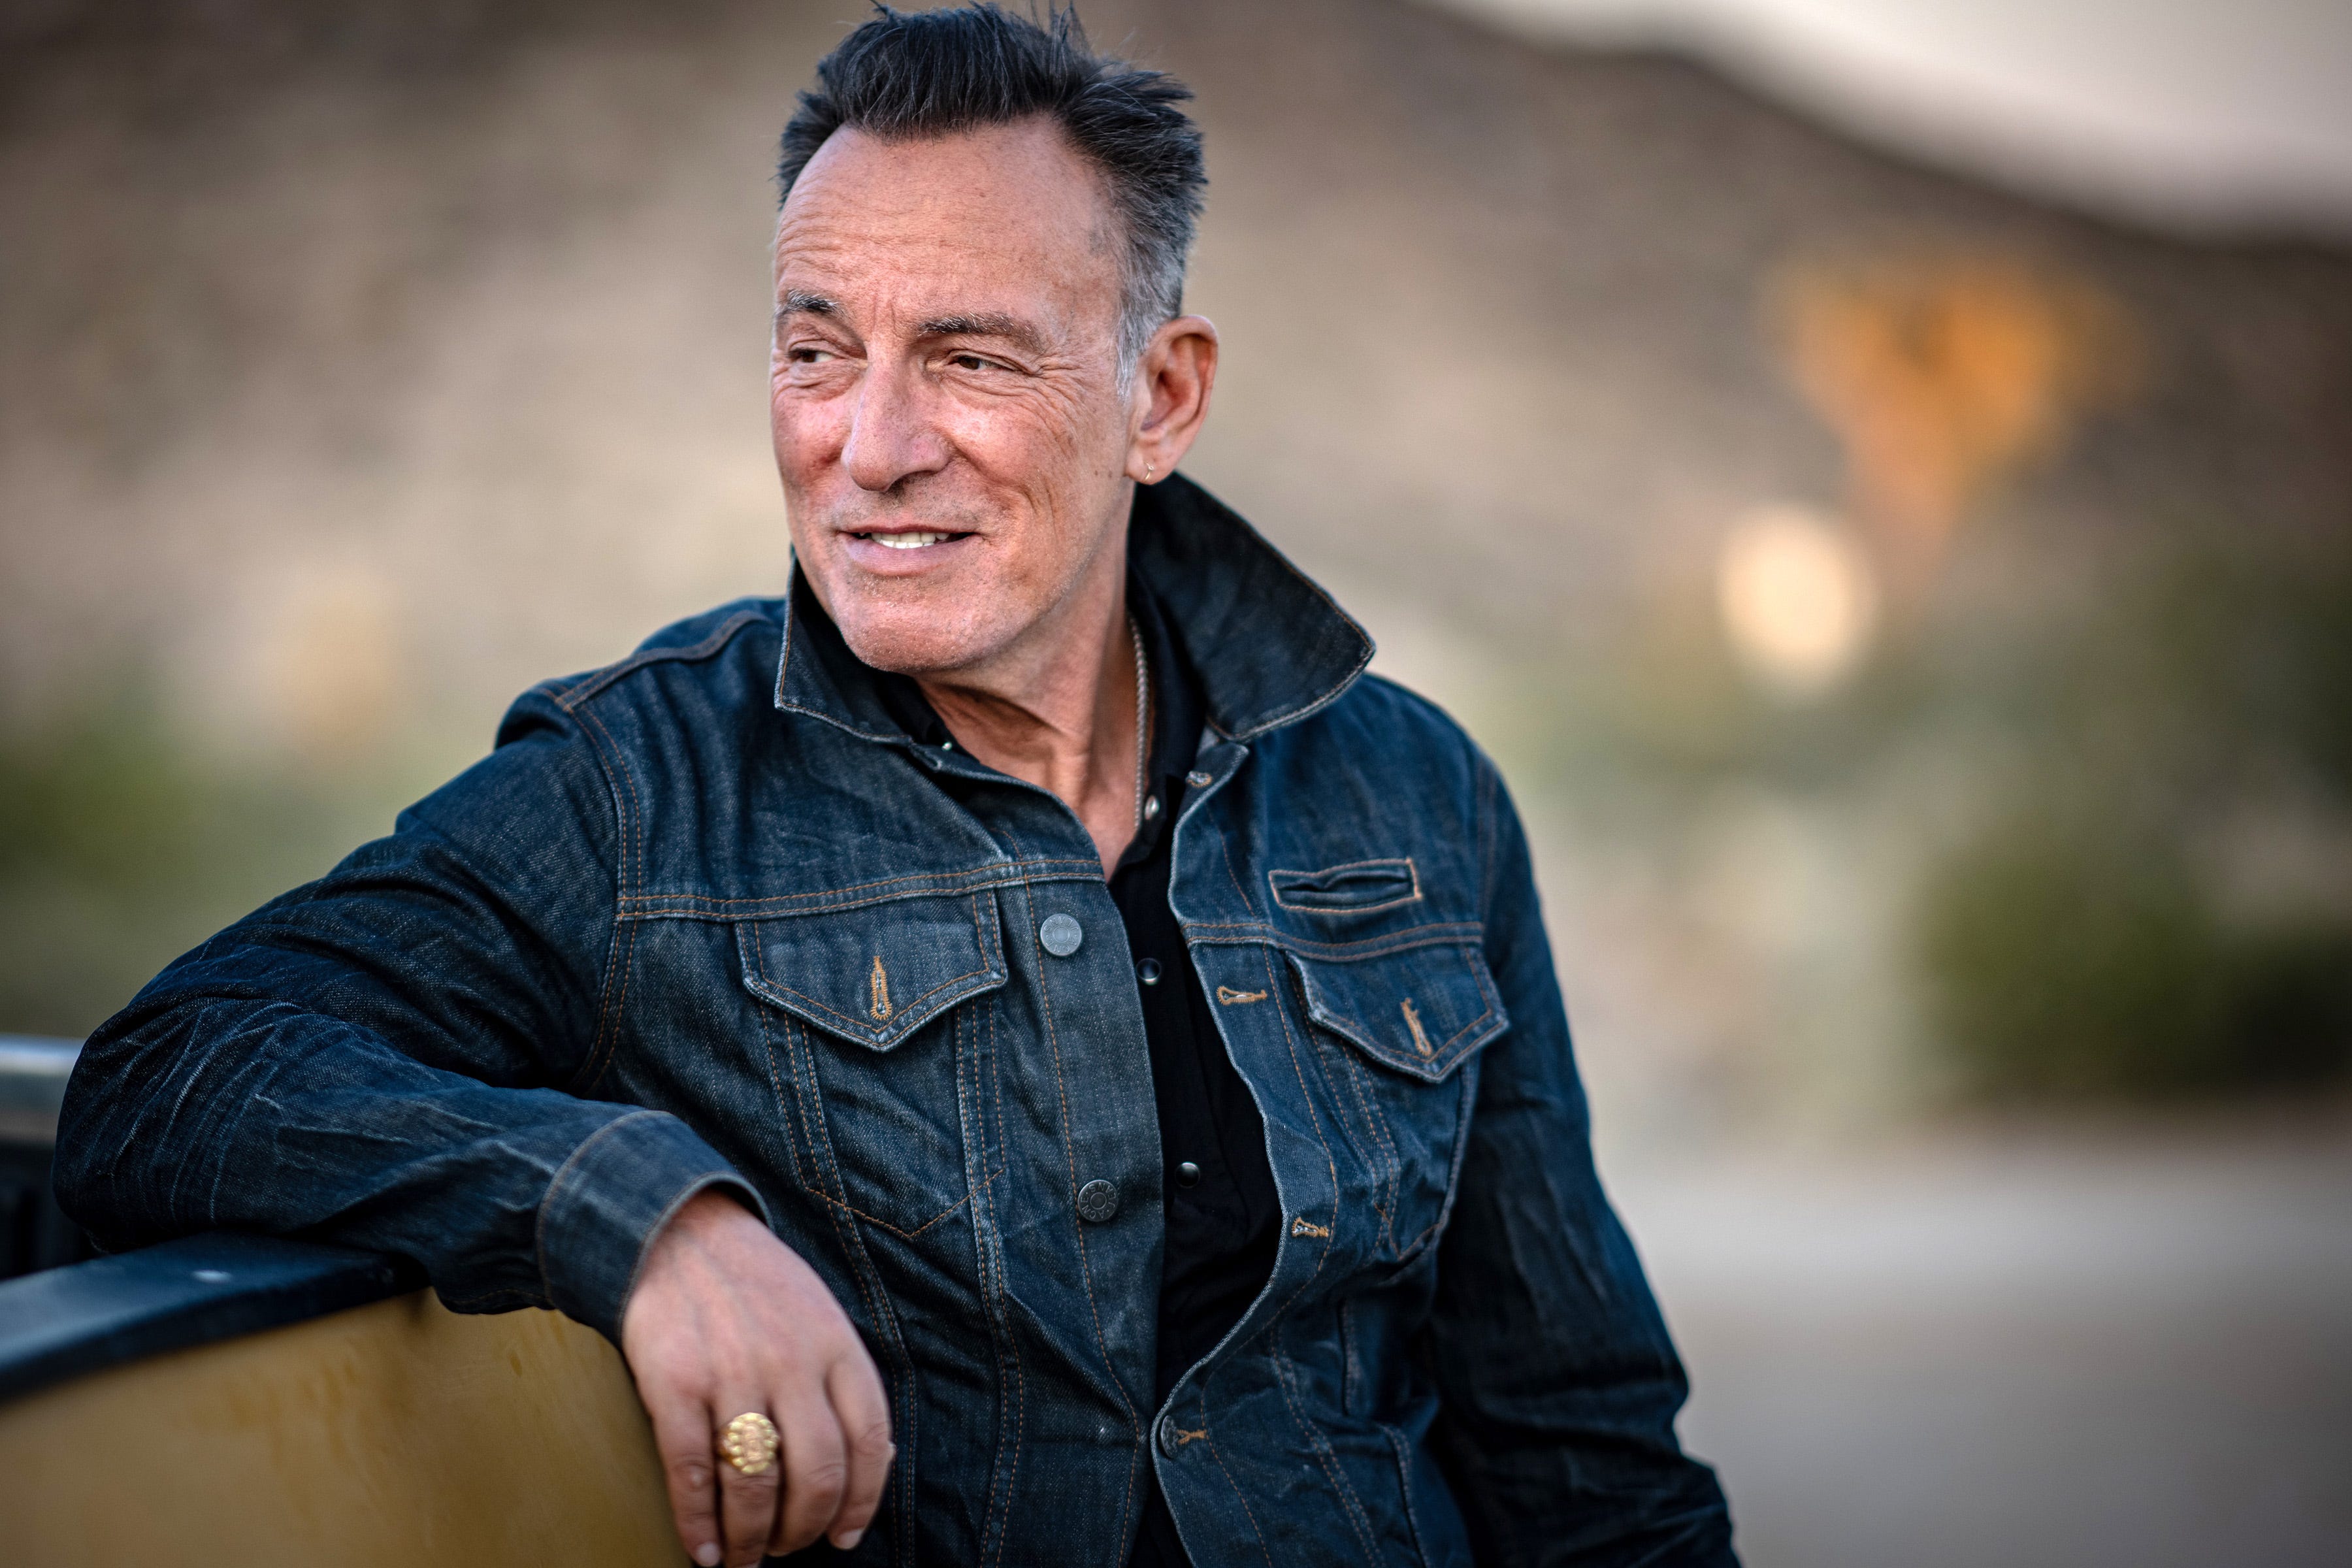 Bruce Springsteen in "Western Stars."